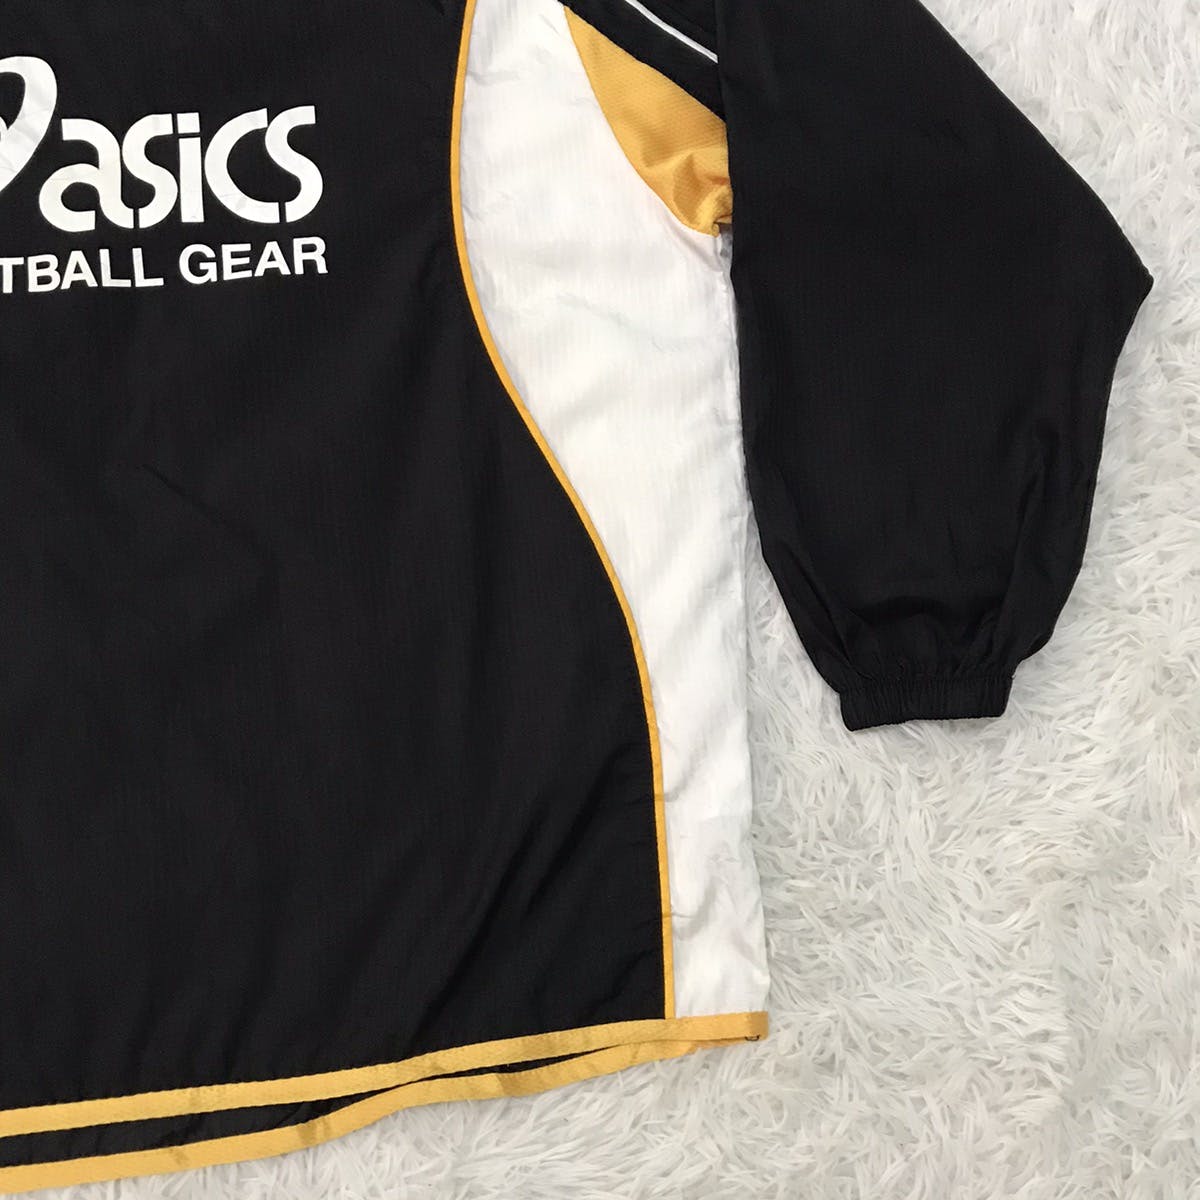 Asics football gear long sleeves - 4